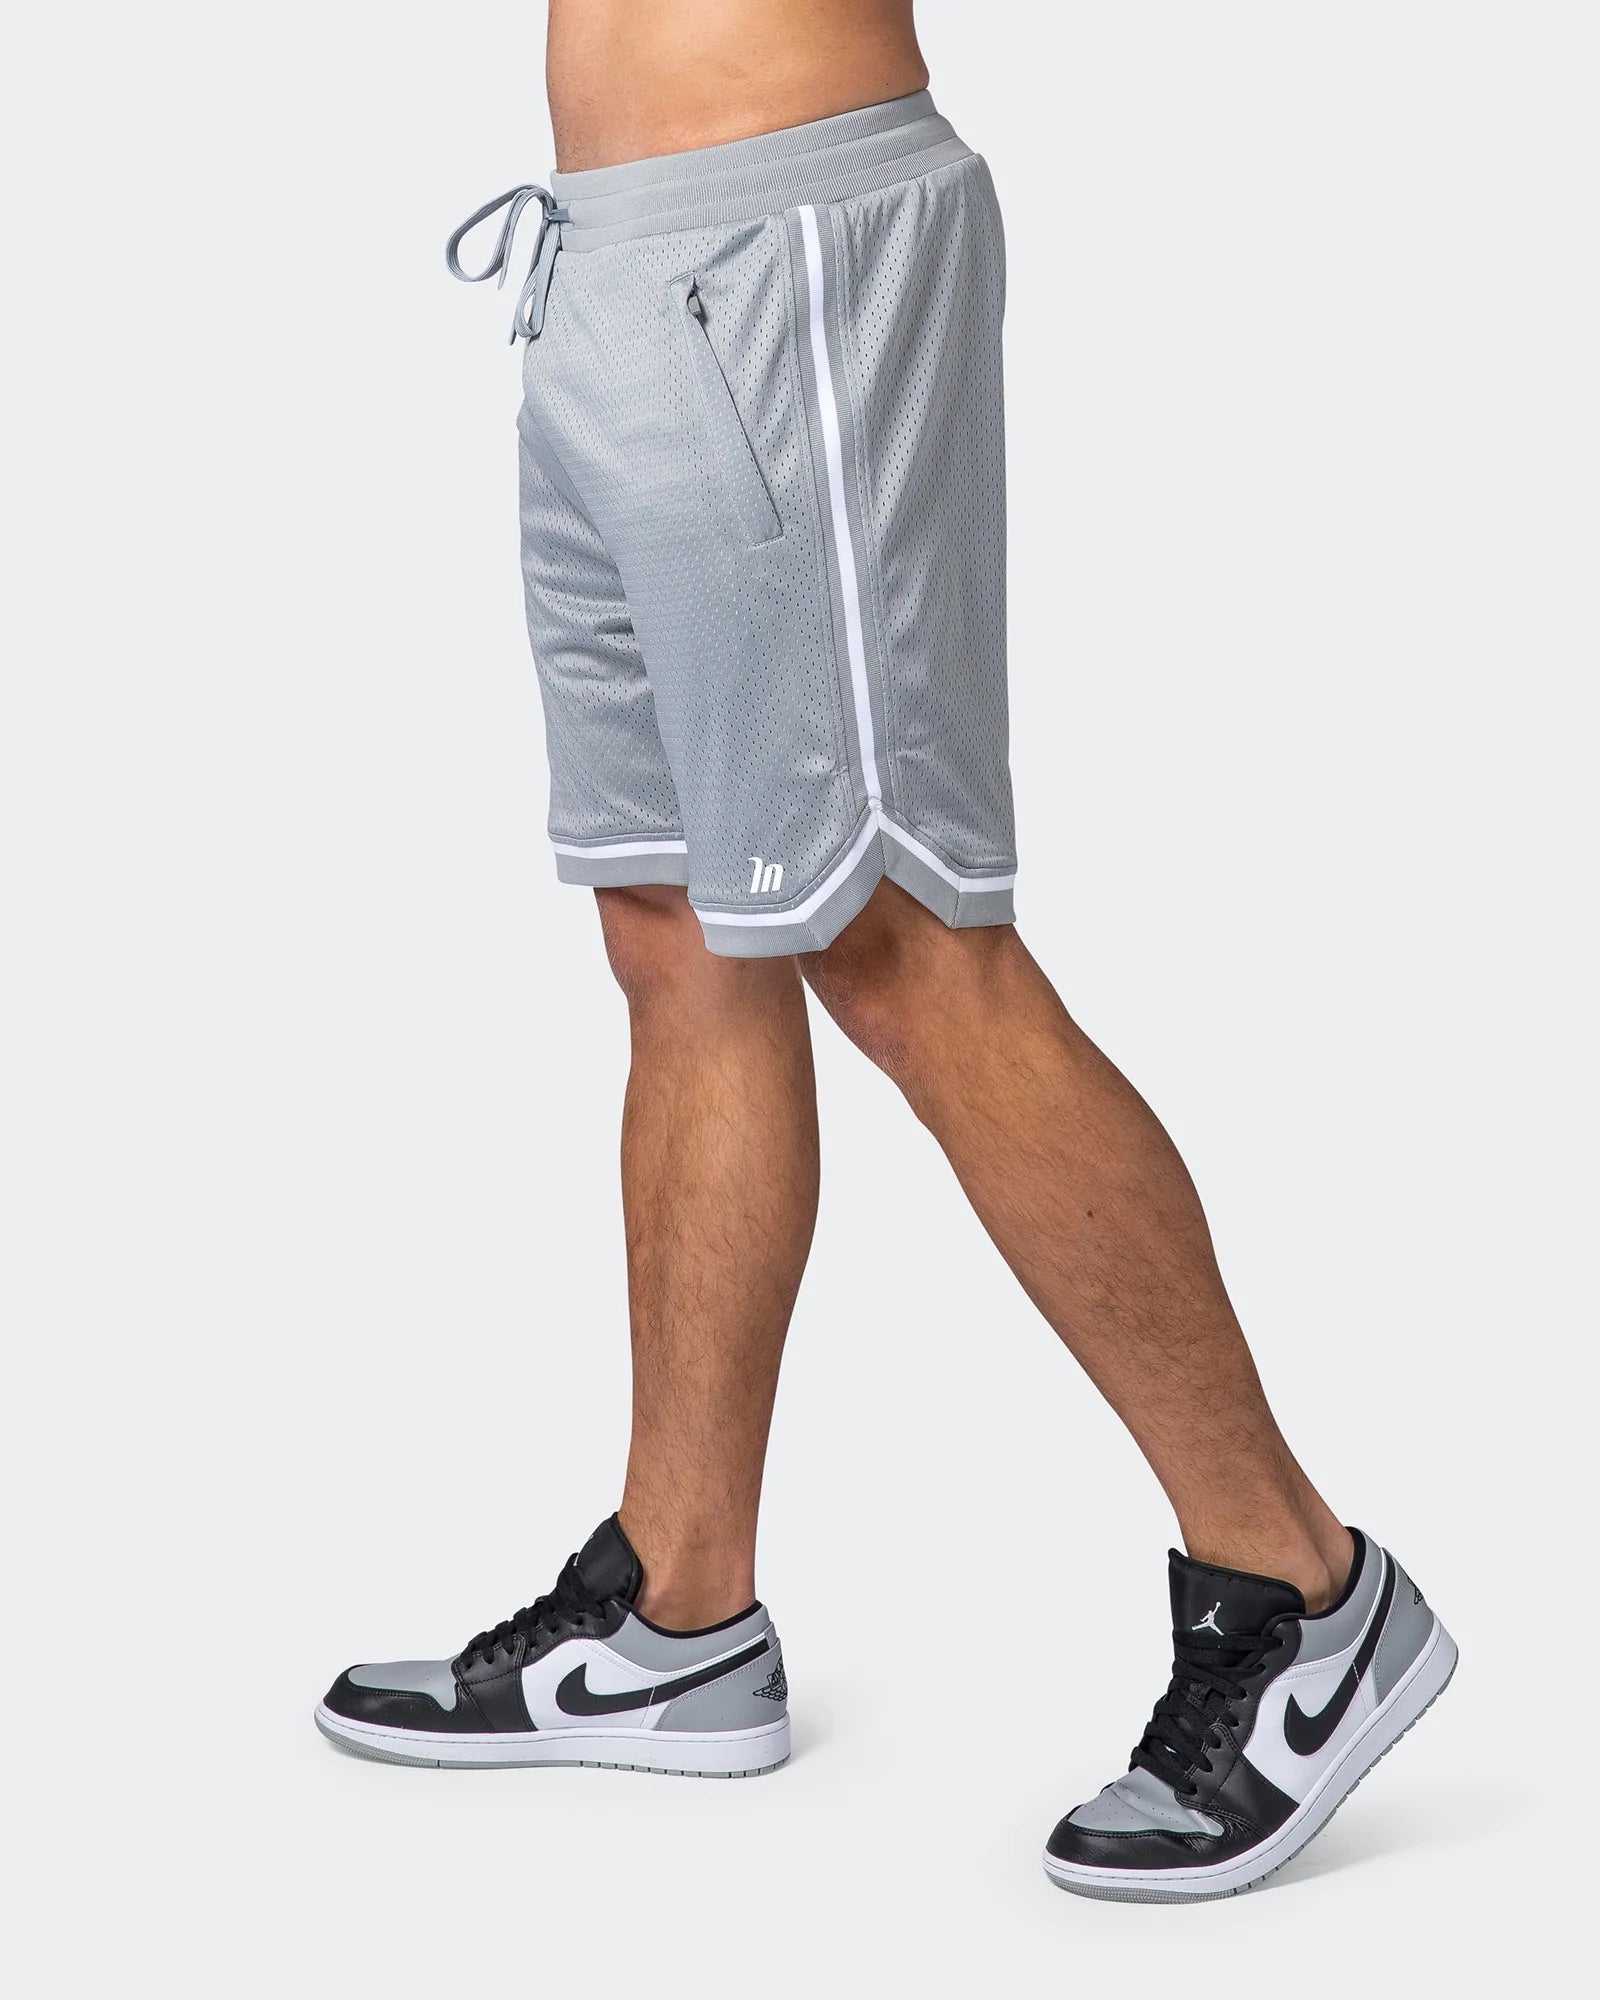 musclenation Shorts 8" Basketball Shorts - Haze